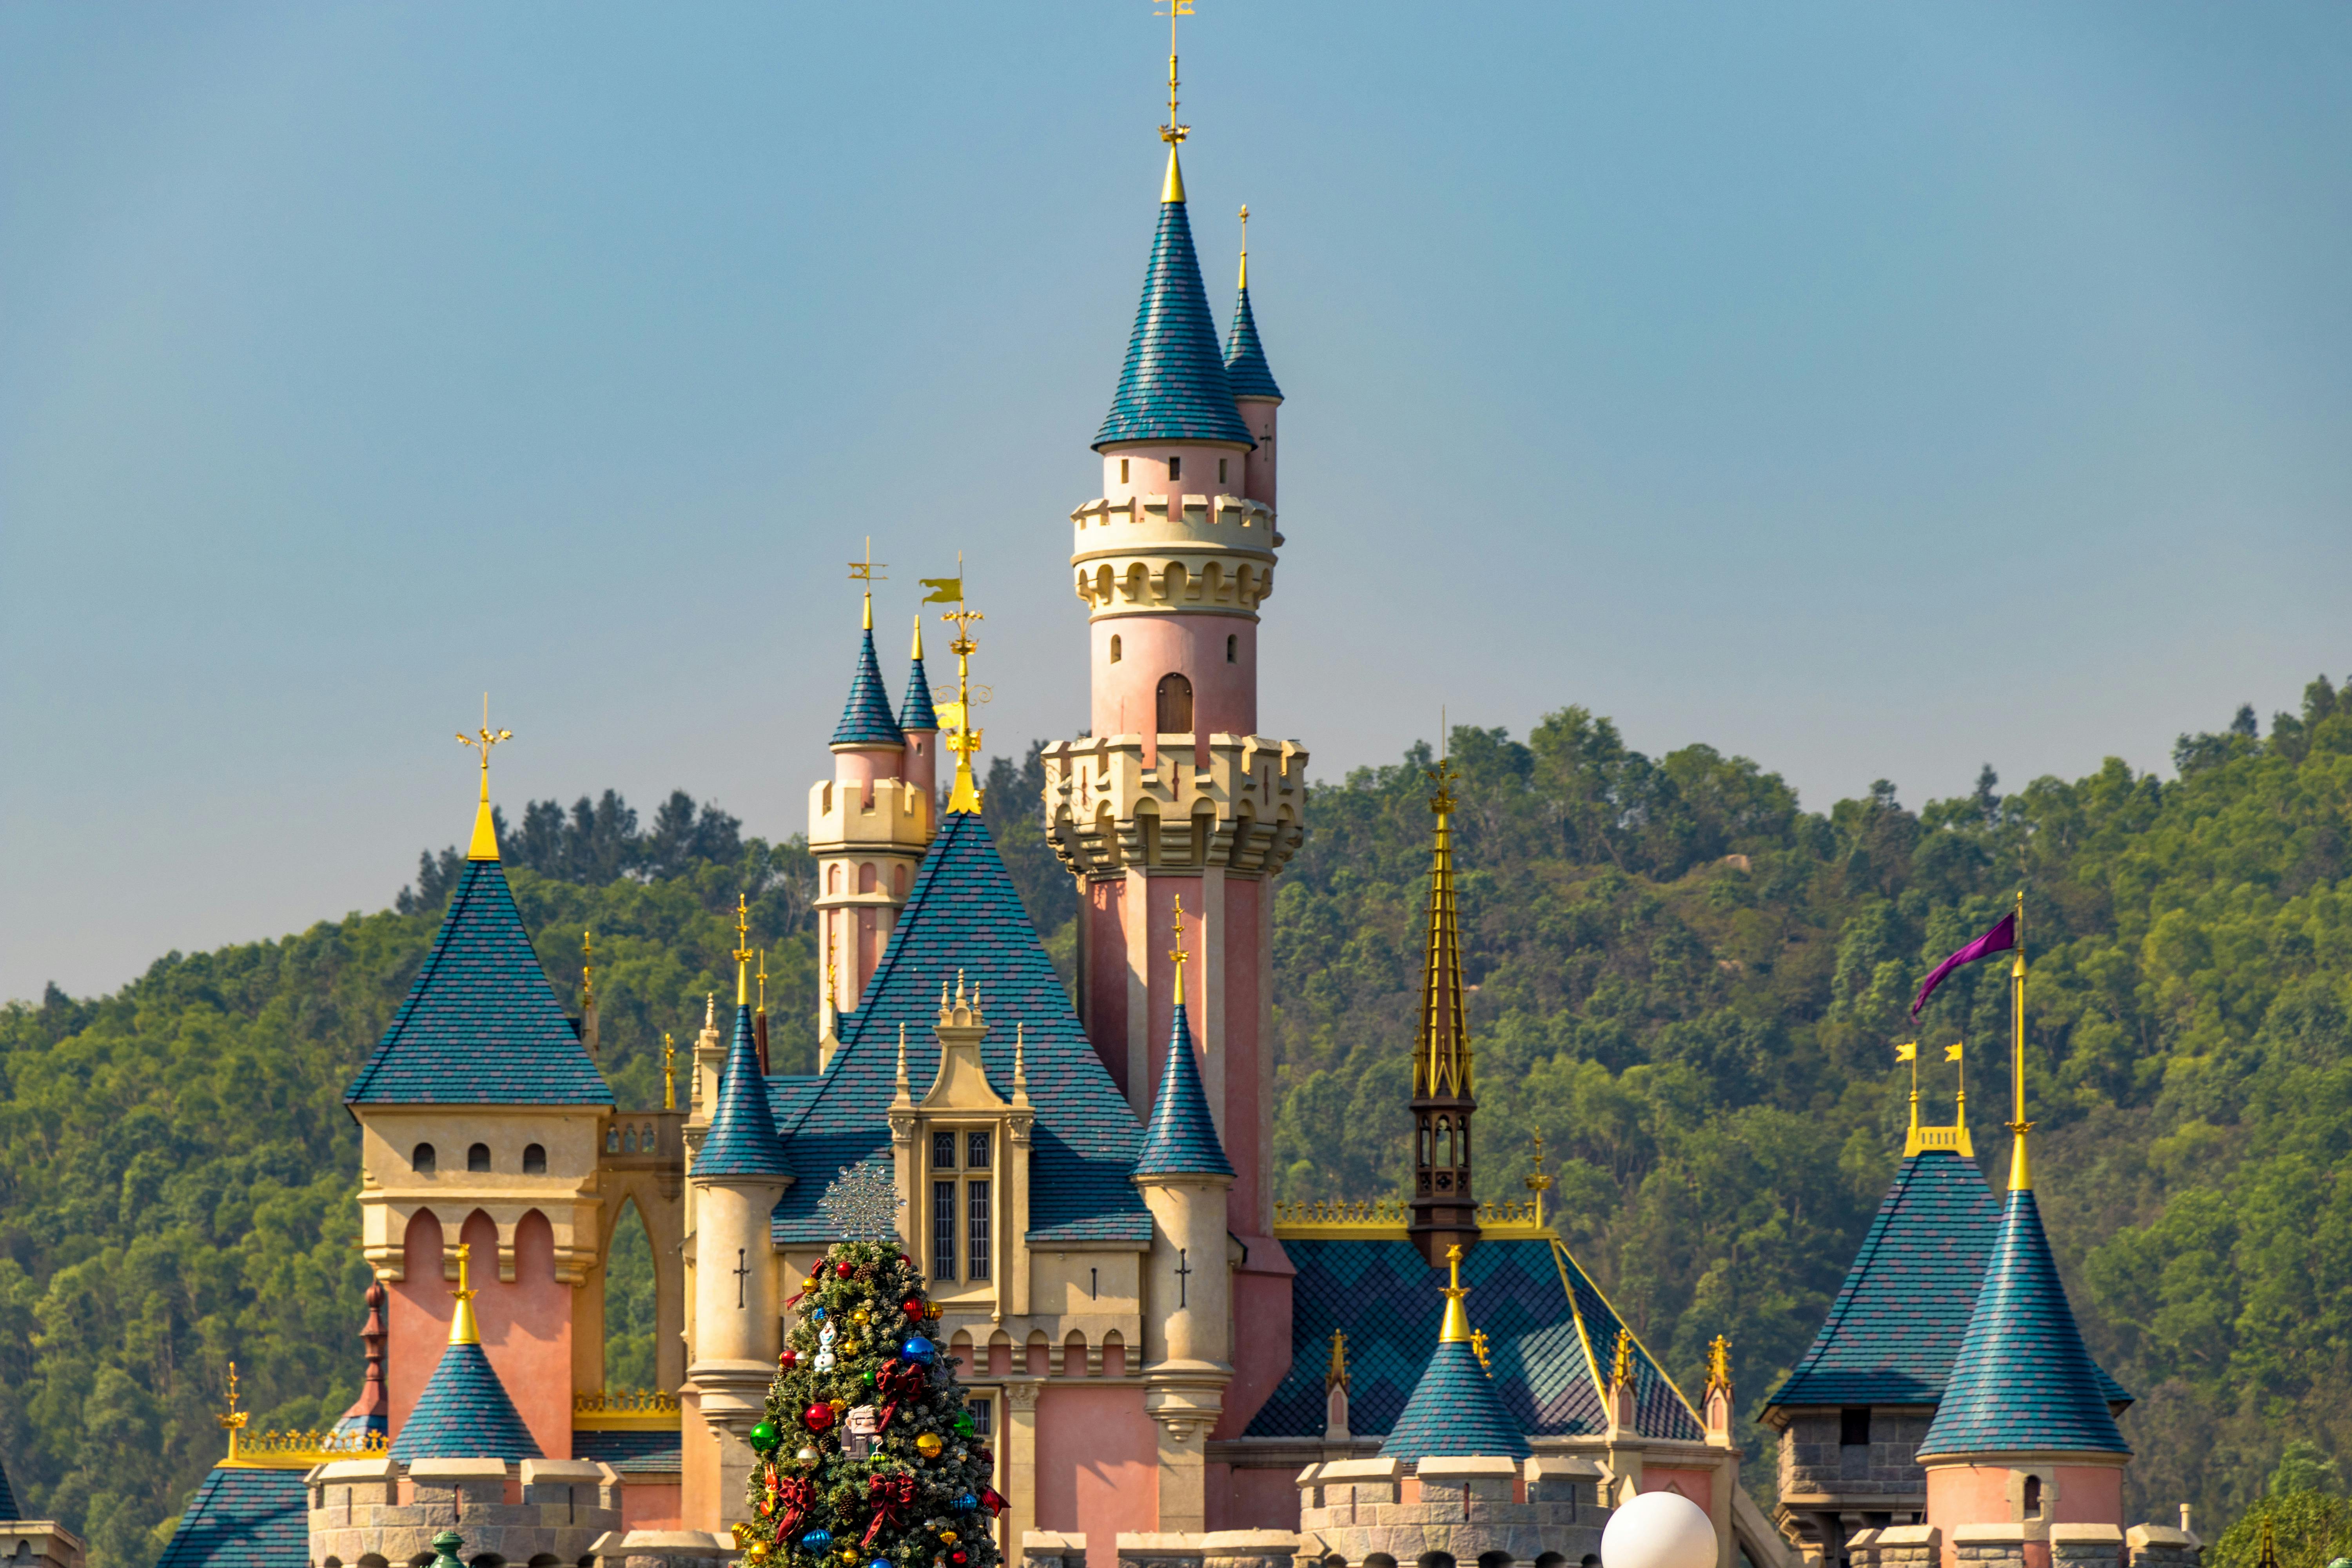 Pexels Photo 837415 ?cs=srgb&dl=amazing Castle Disneyland Hong Kong 837415 &fm=jpg